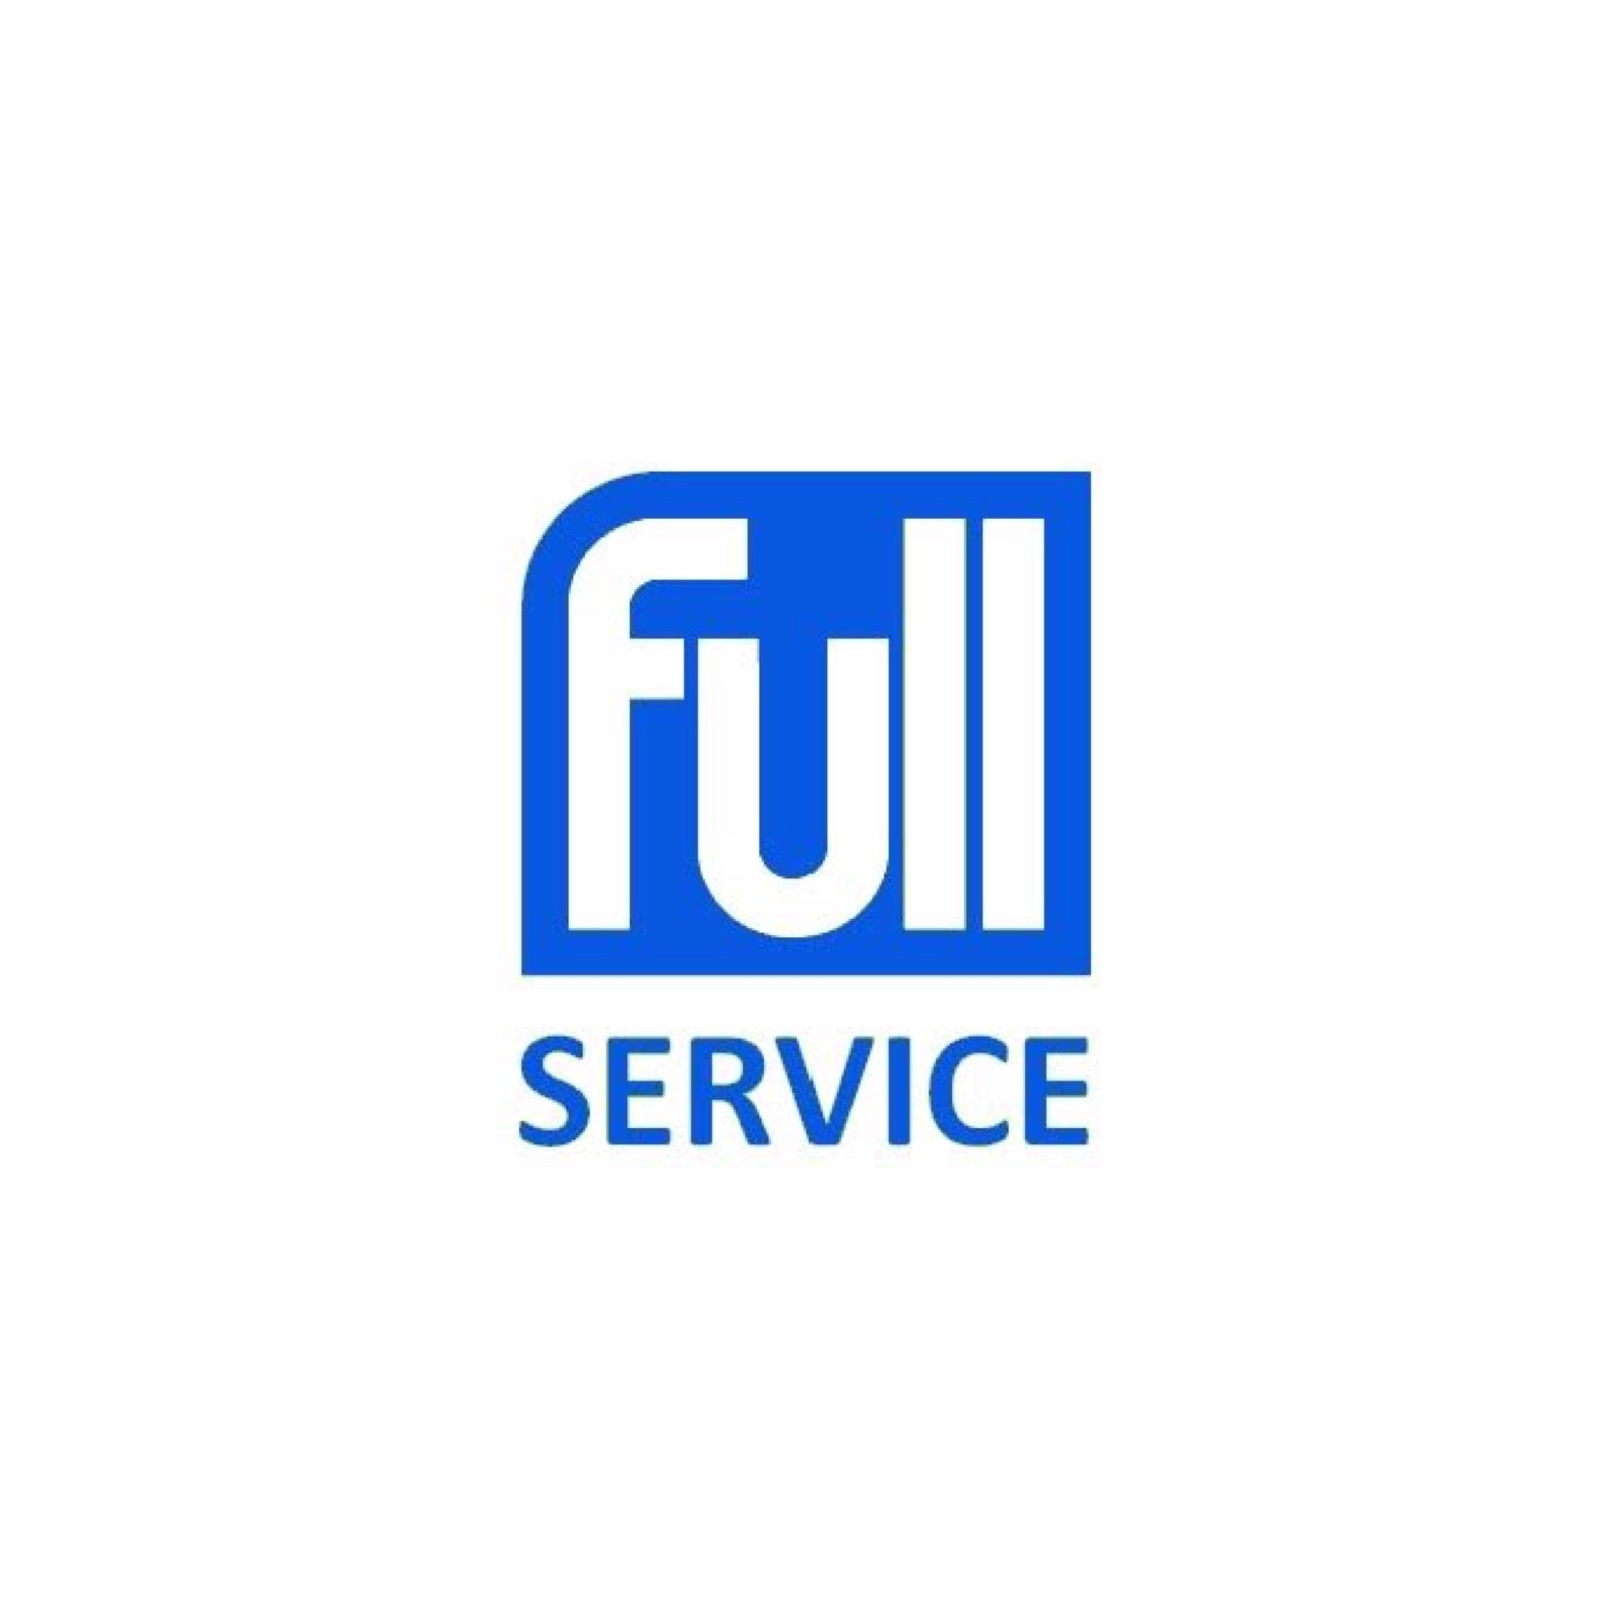 Full-service